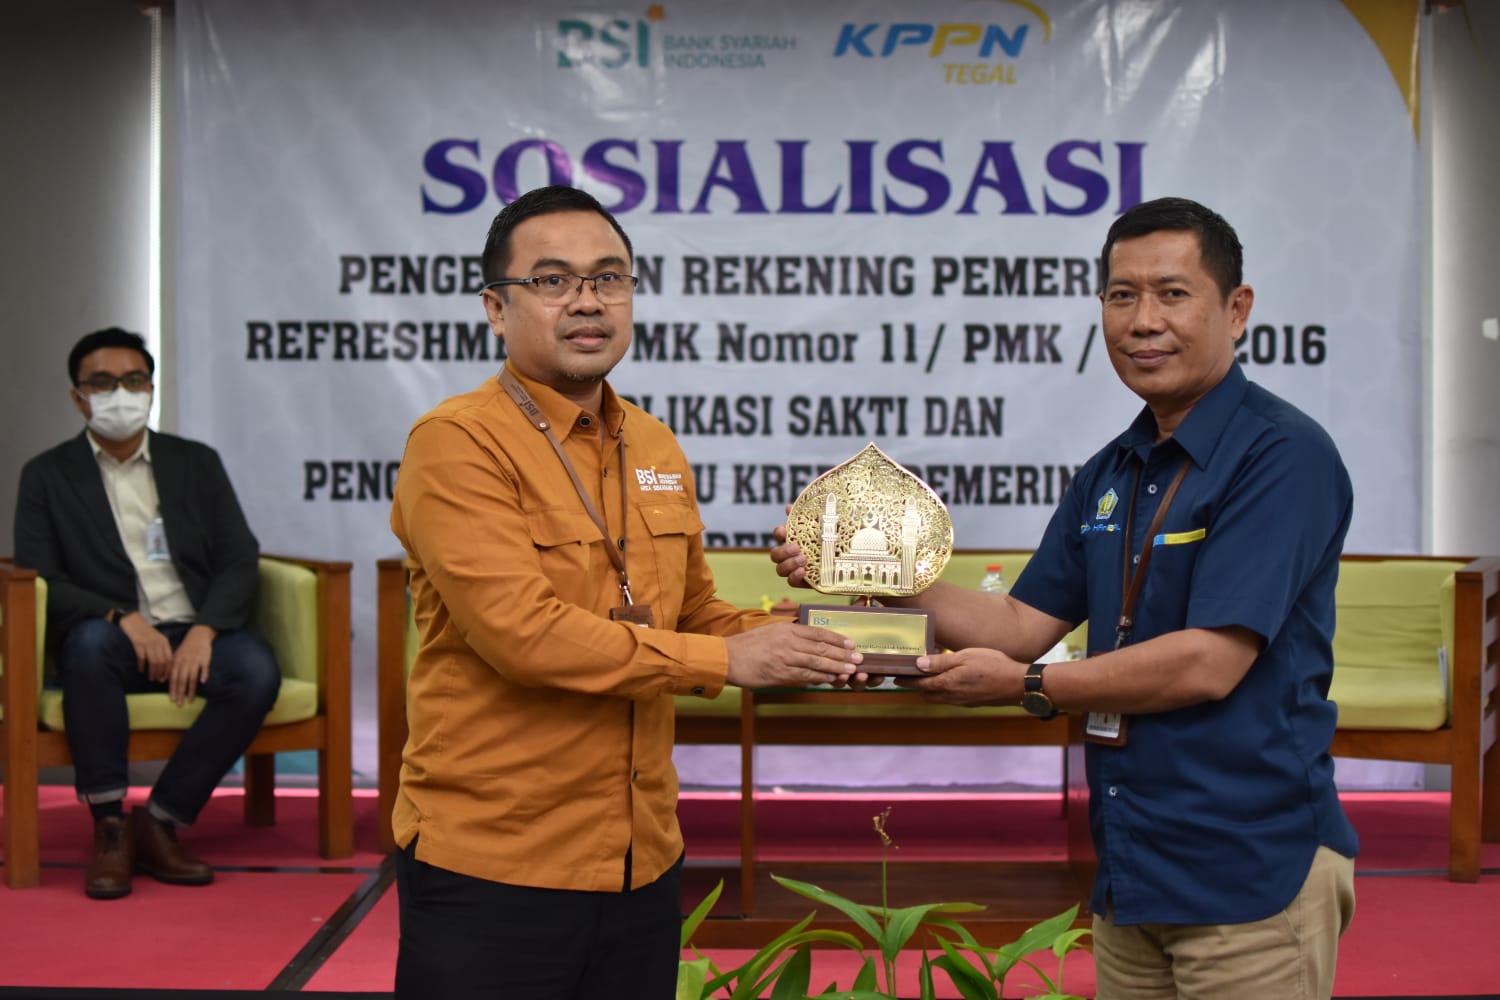 BSI Area Semarang Raya Sosialisasikan Refreshment PMK Nomor 11 Tahun 2016 